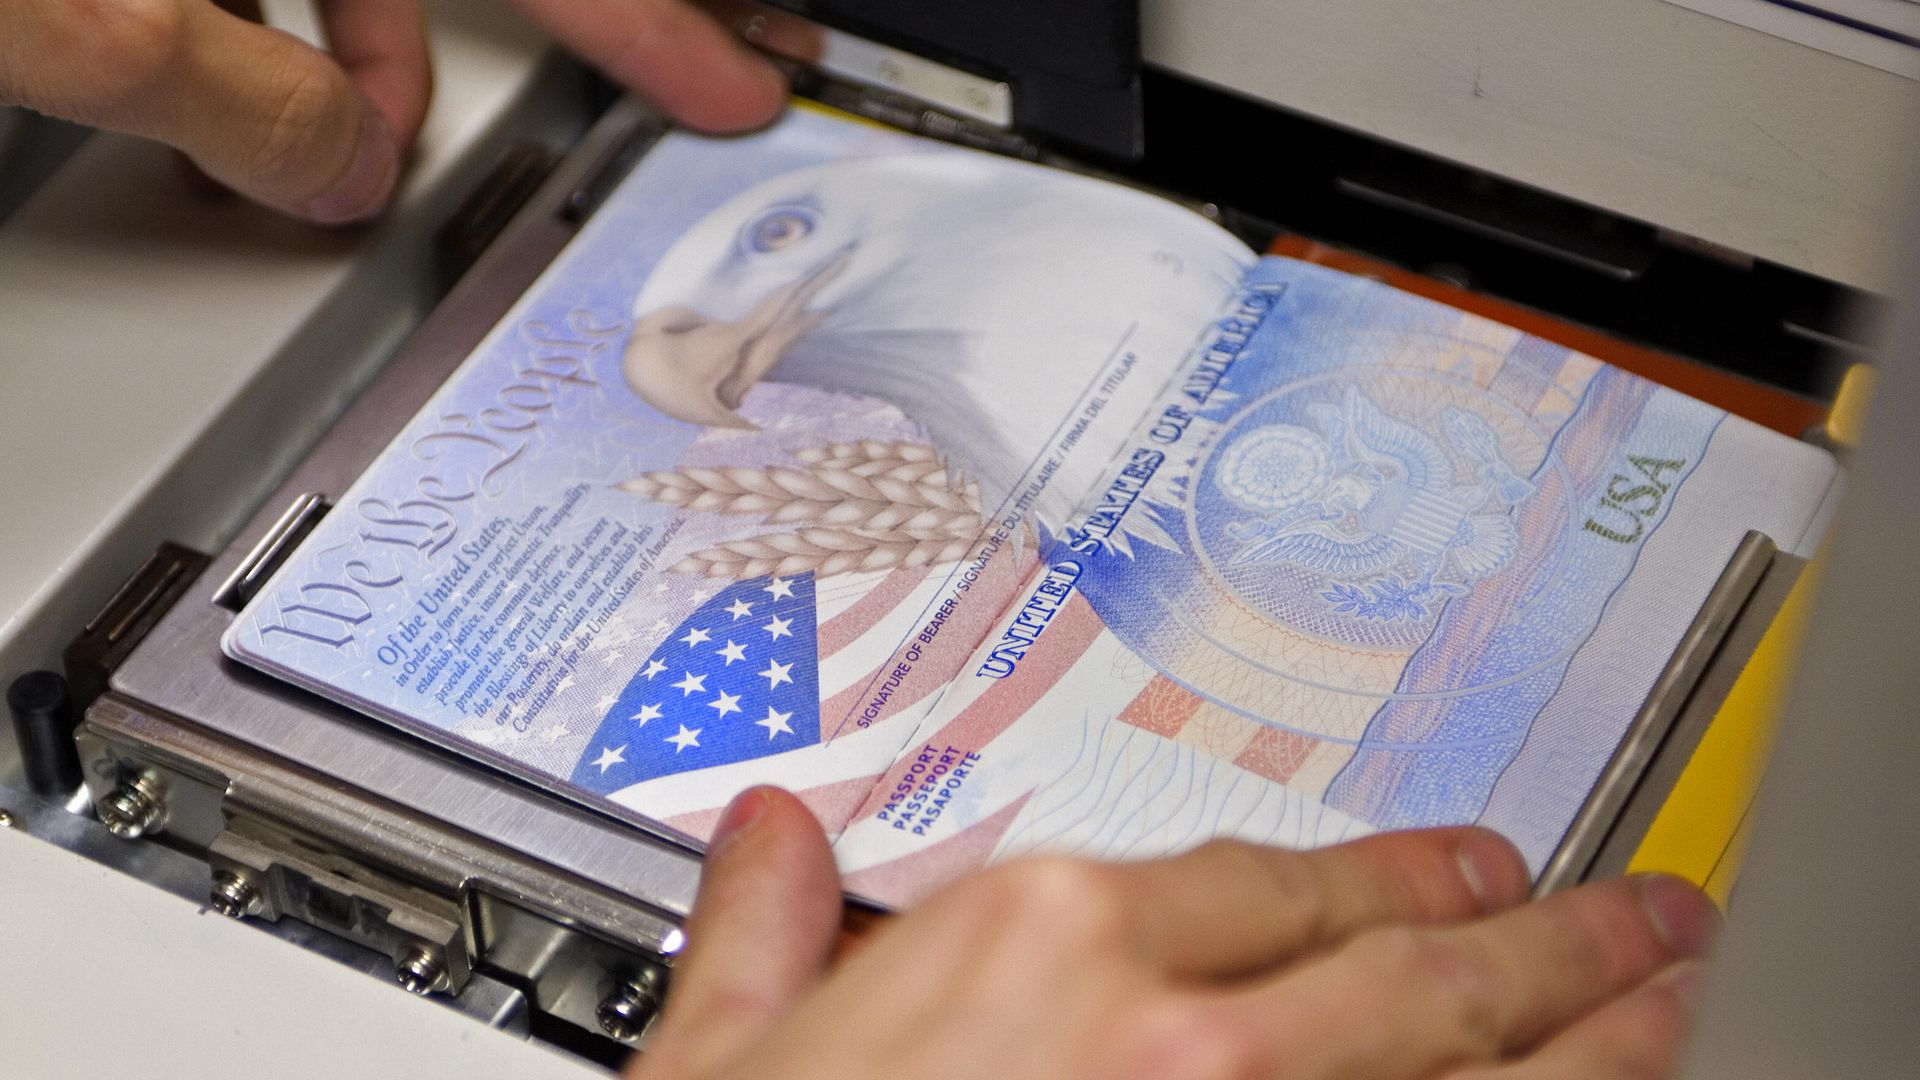 A United States passport